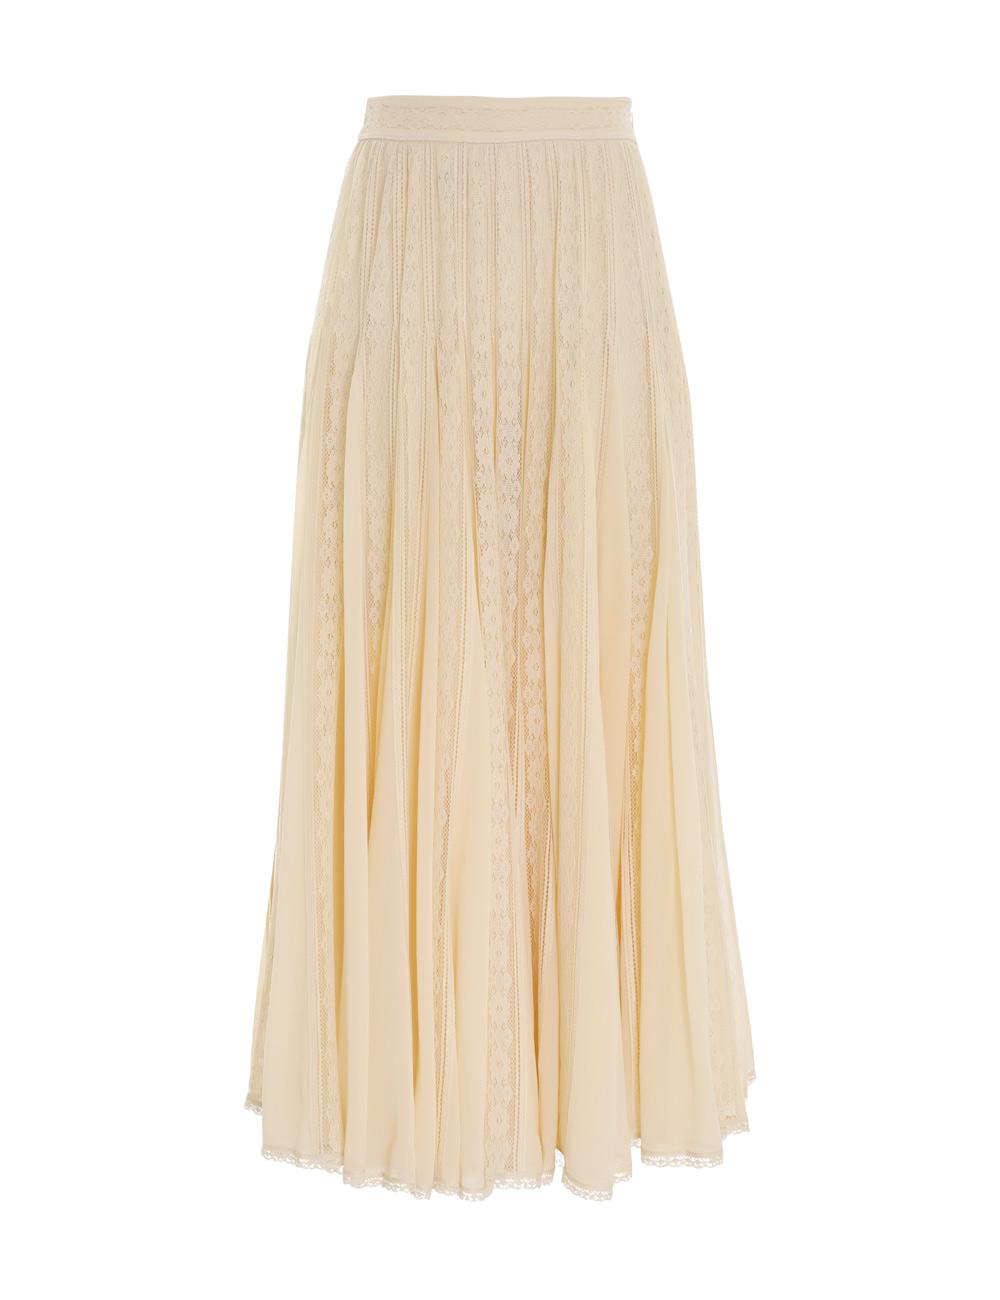 Zimmermann Wonderland Lace Vent Skirt in Natural | Lyst